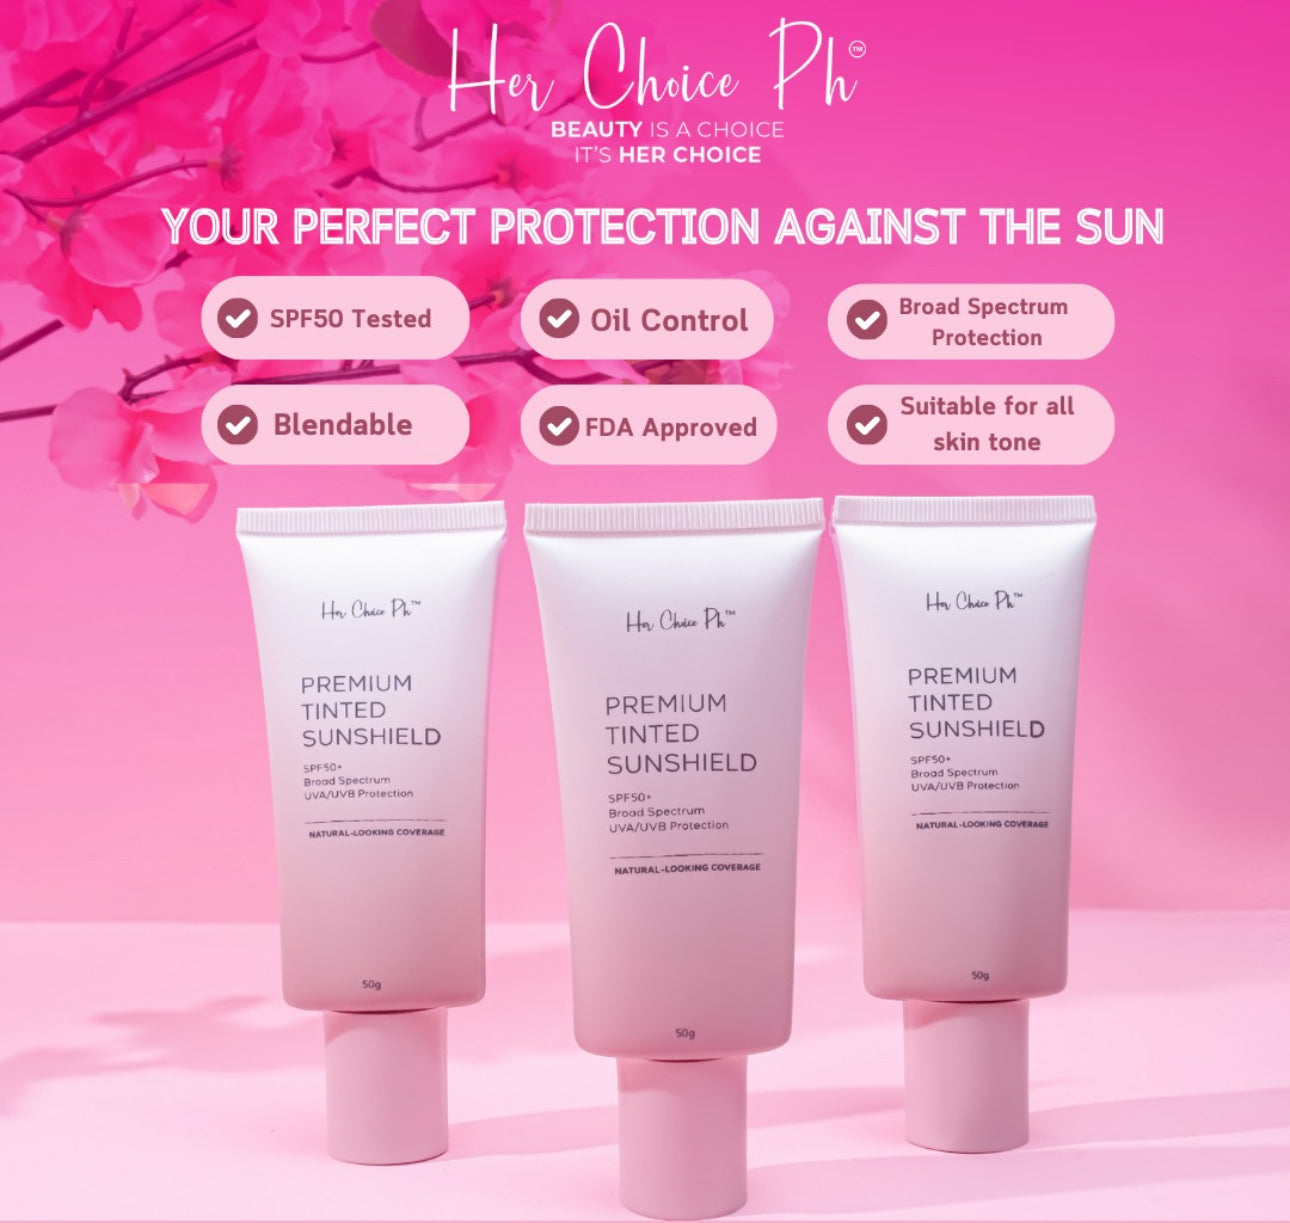 Her Choice PH Premium Tinted Sunscreen 50g